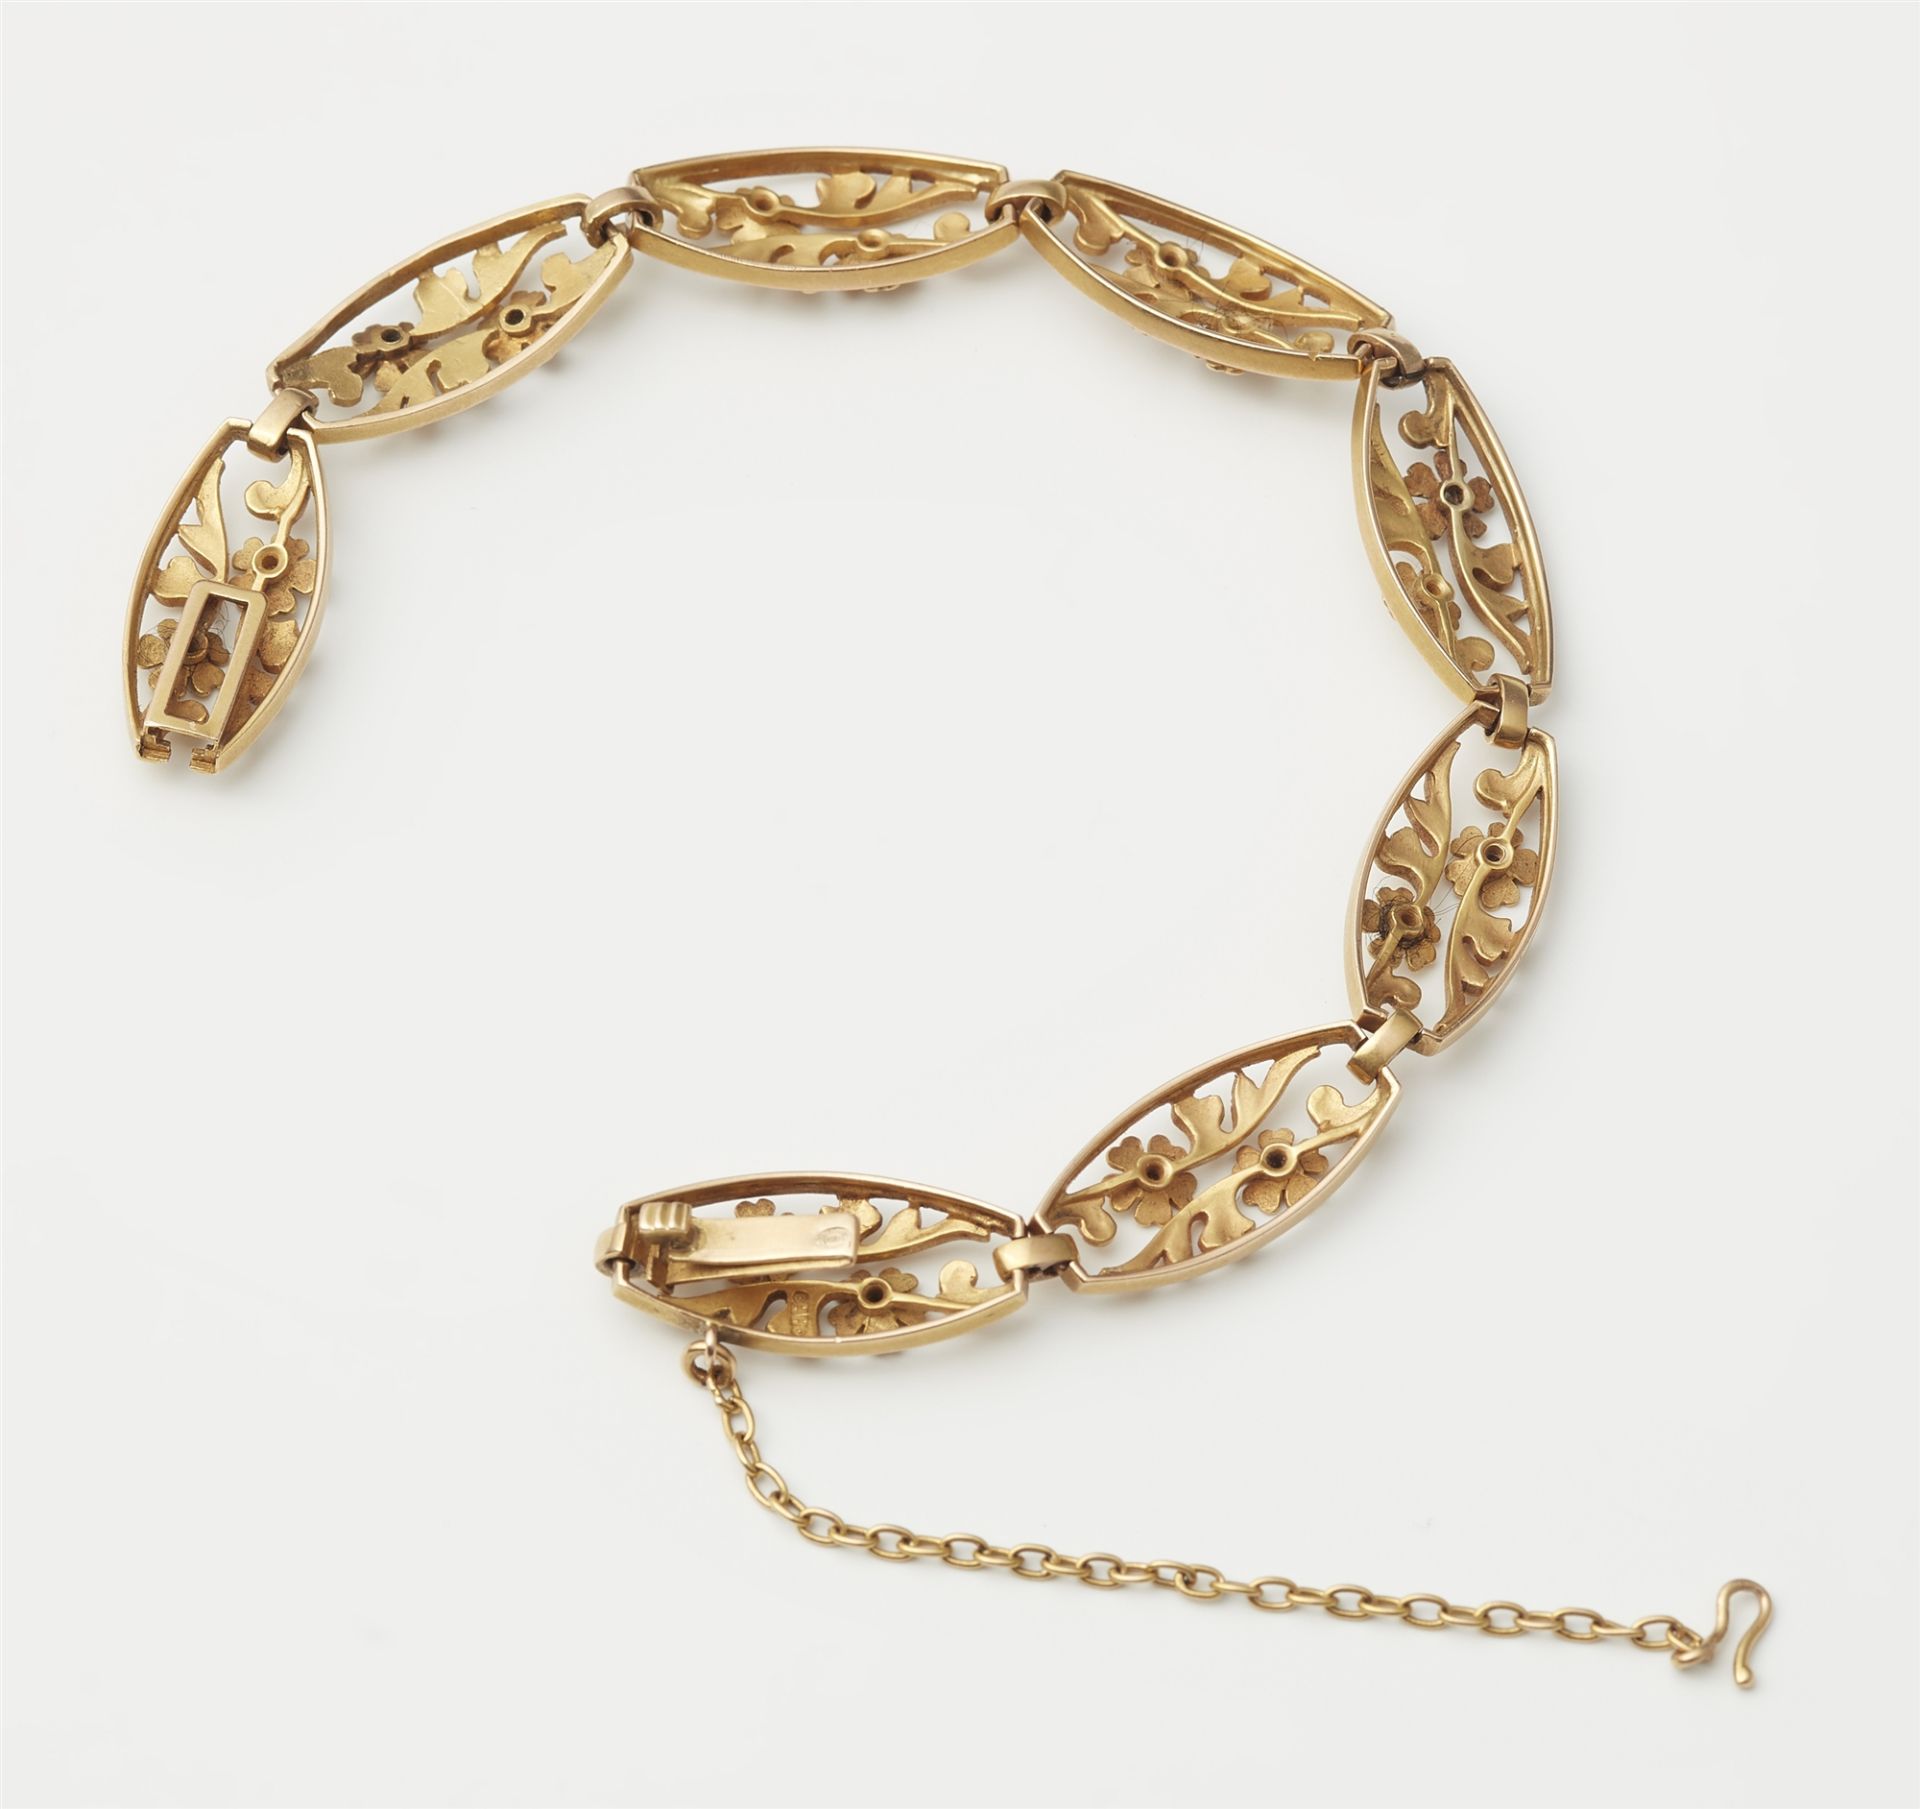 An 18 K gold and diamond Belle Epoque bracelet - Image 2 of 2